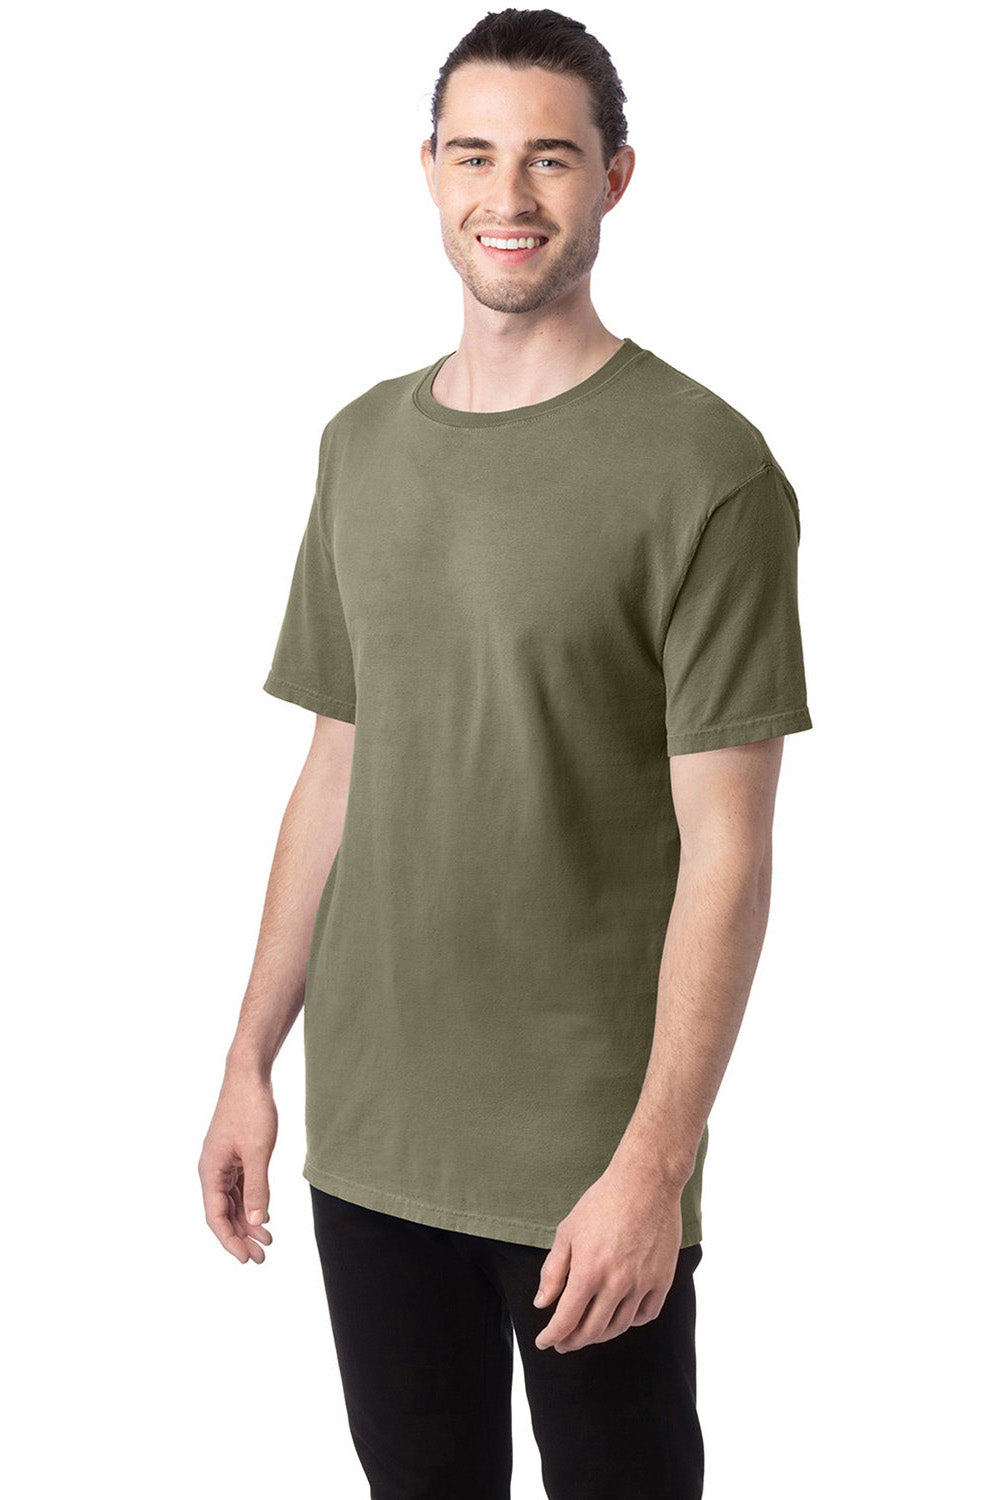 ComfortWash by Hanes GDH100 Mens Short Sleeve Crewneck T-Shirt Faded Fatigue Green 3Q